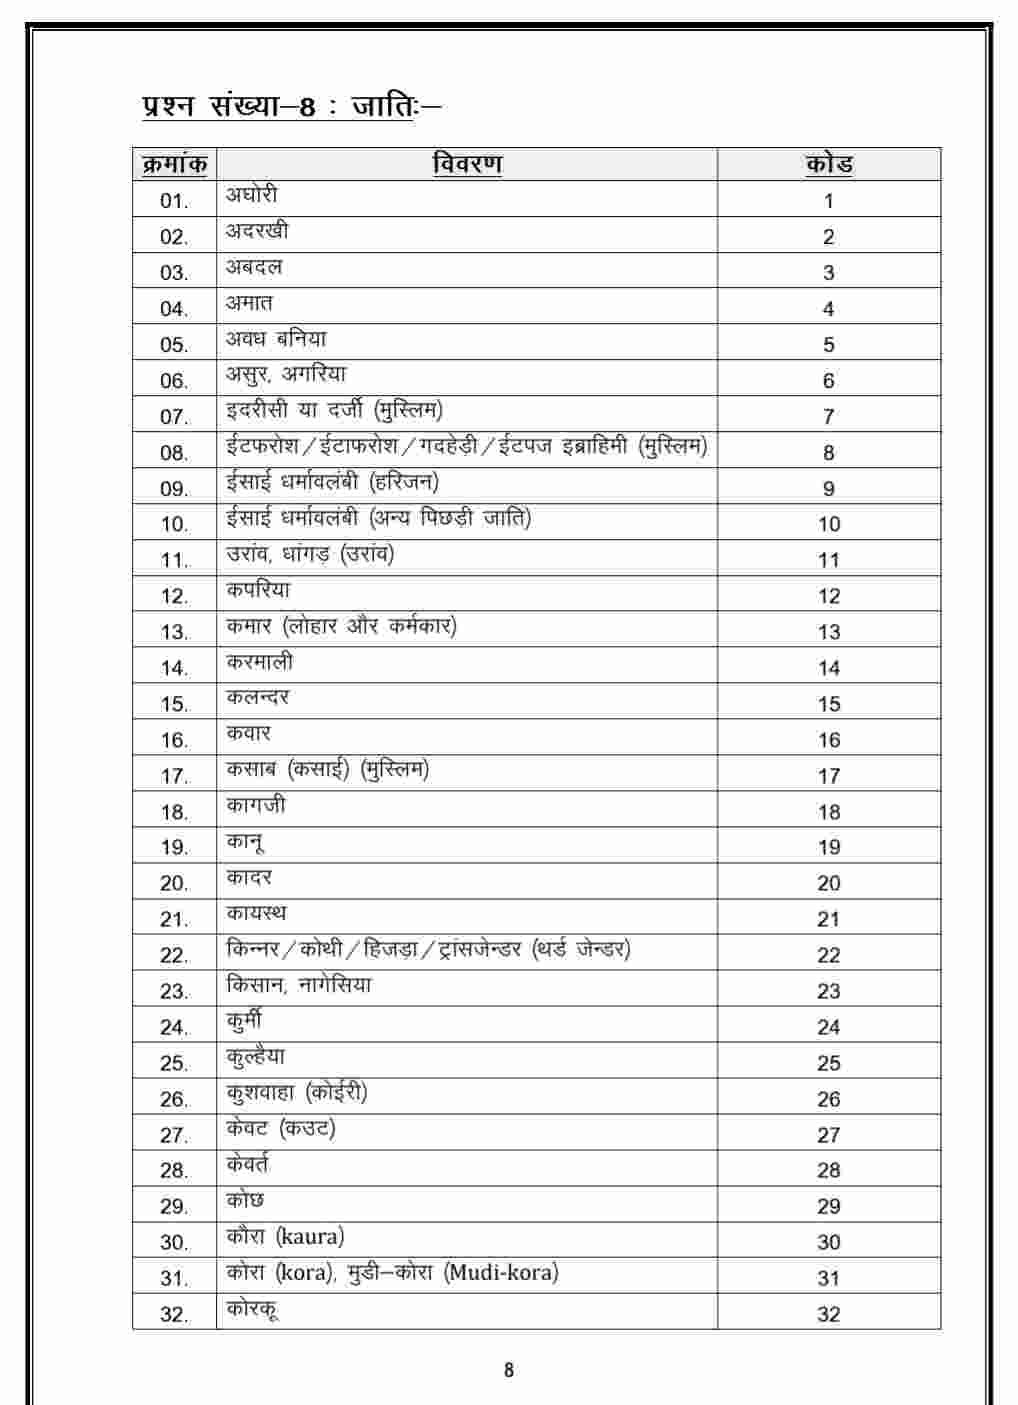 Bihar Caste Code List